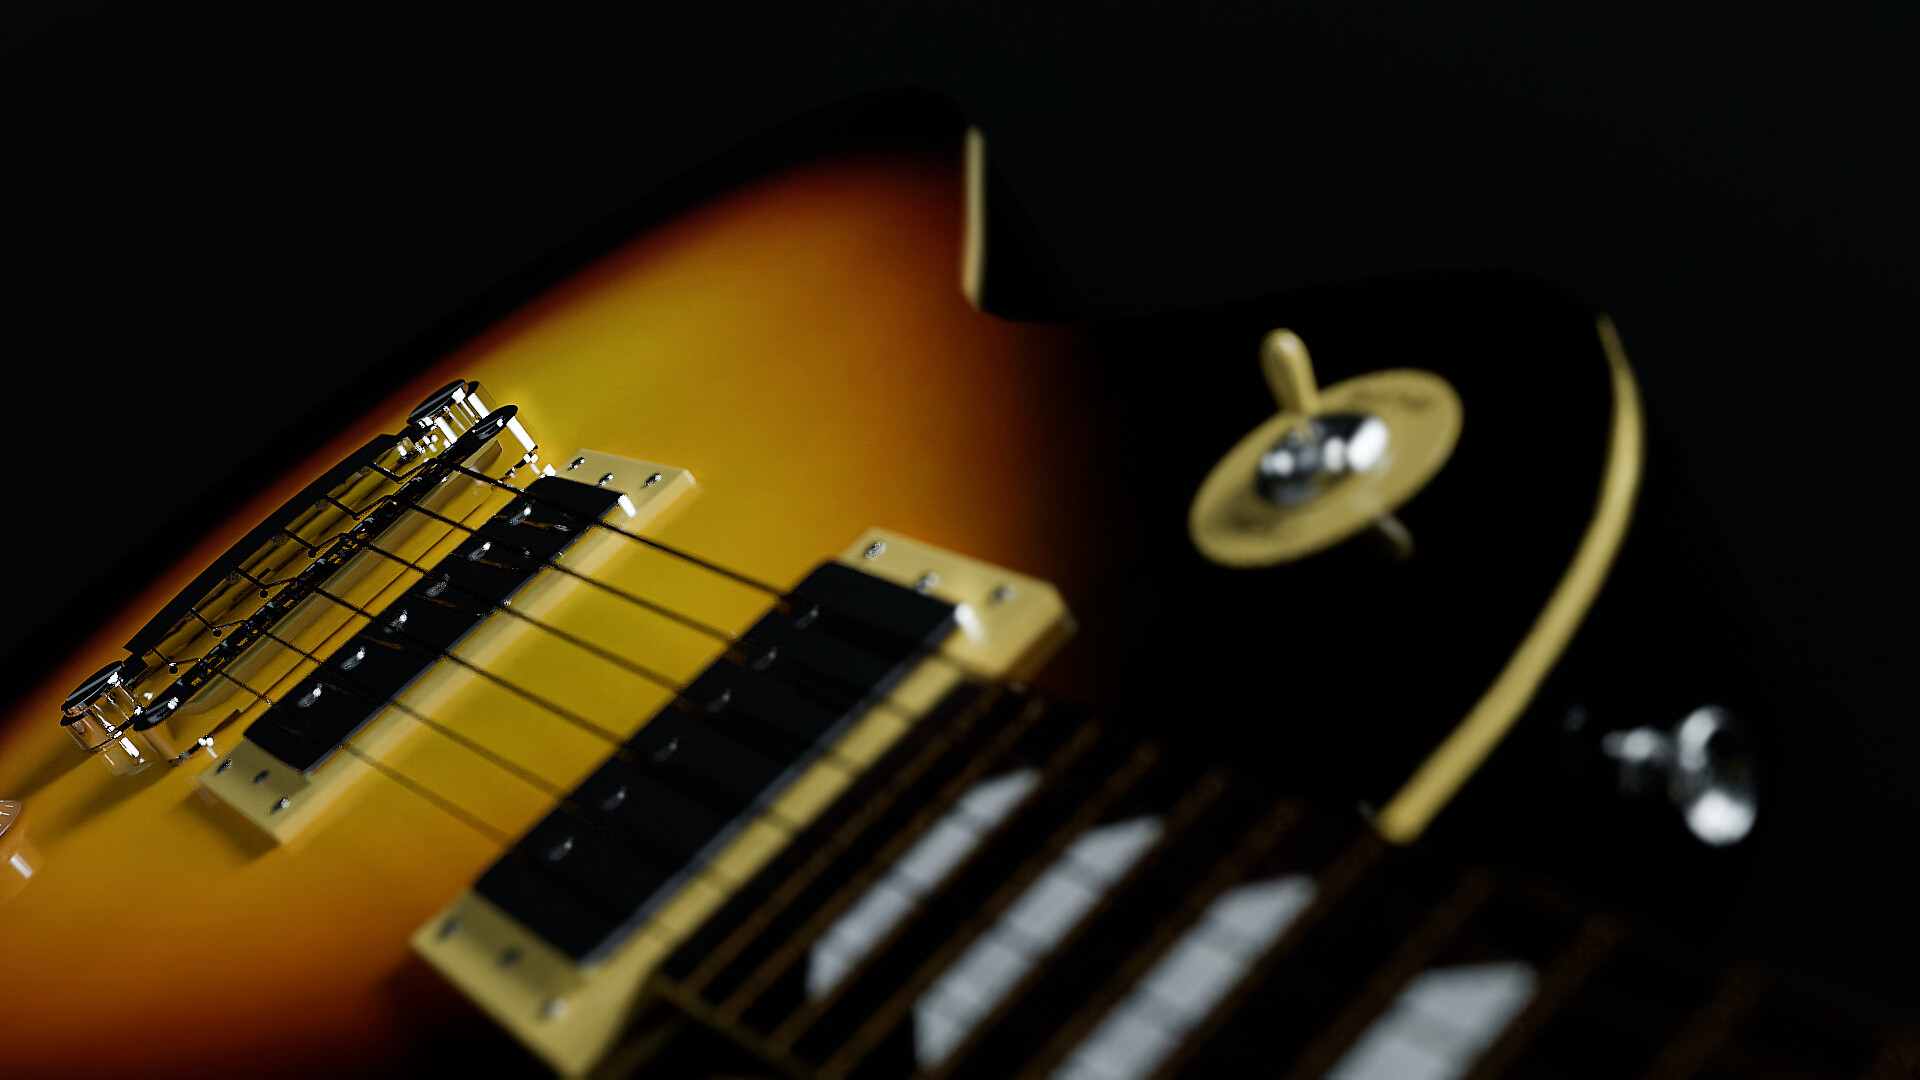 Gibson Guitar: The Joe Perry Boneyard Les Paul, An extremely rare musical instrument. 1920x1080 Full HD Wallpaper.